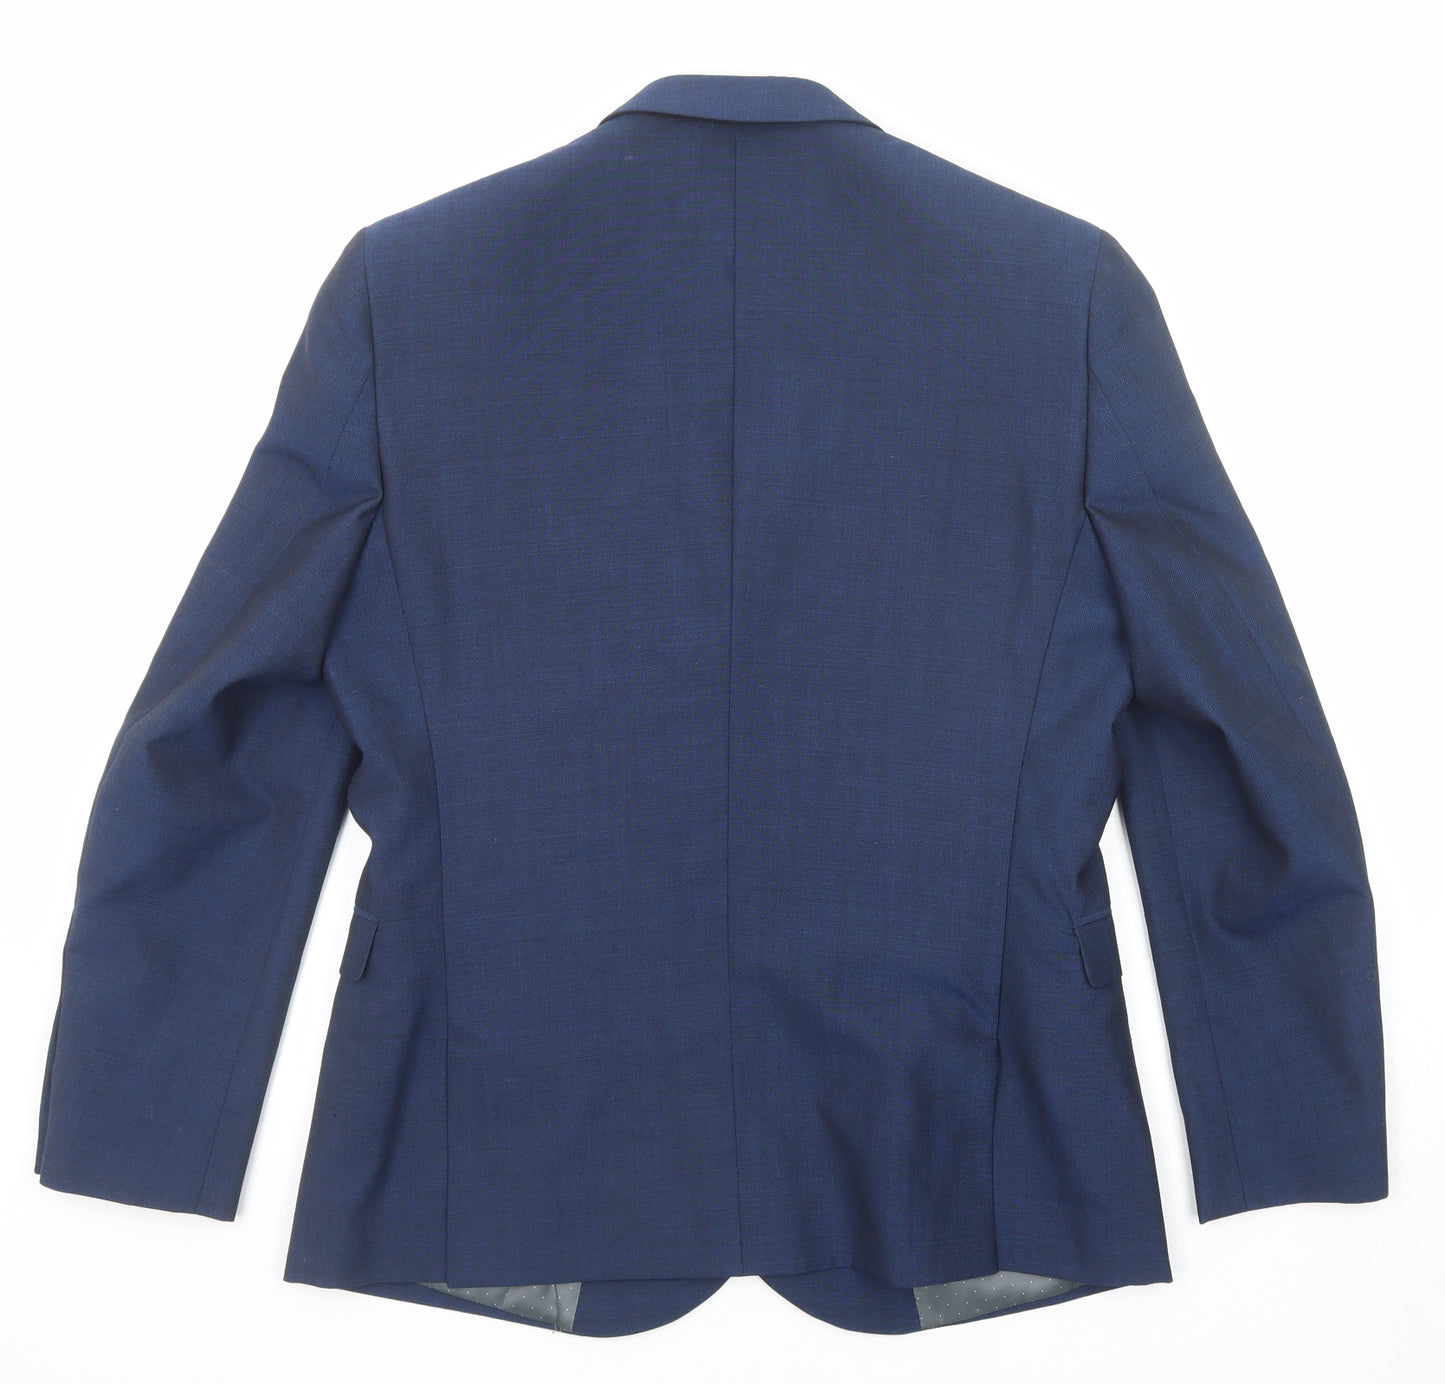 NEXT Mens Blue Wool Jacket Suit Jacket Size 40 Regular